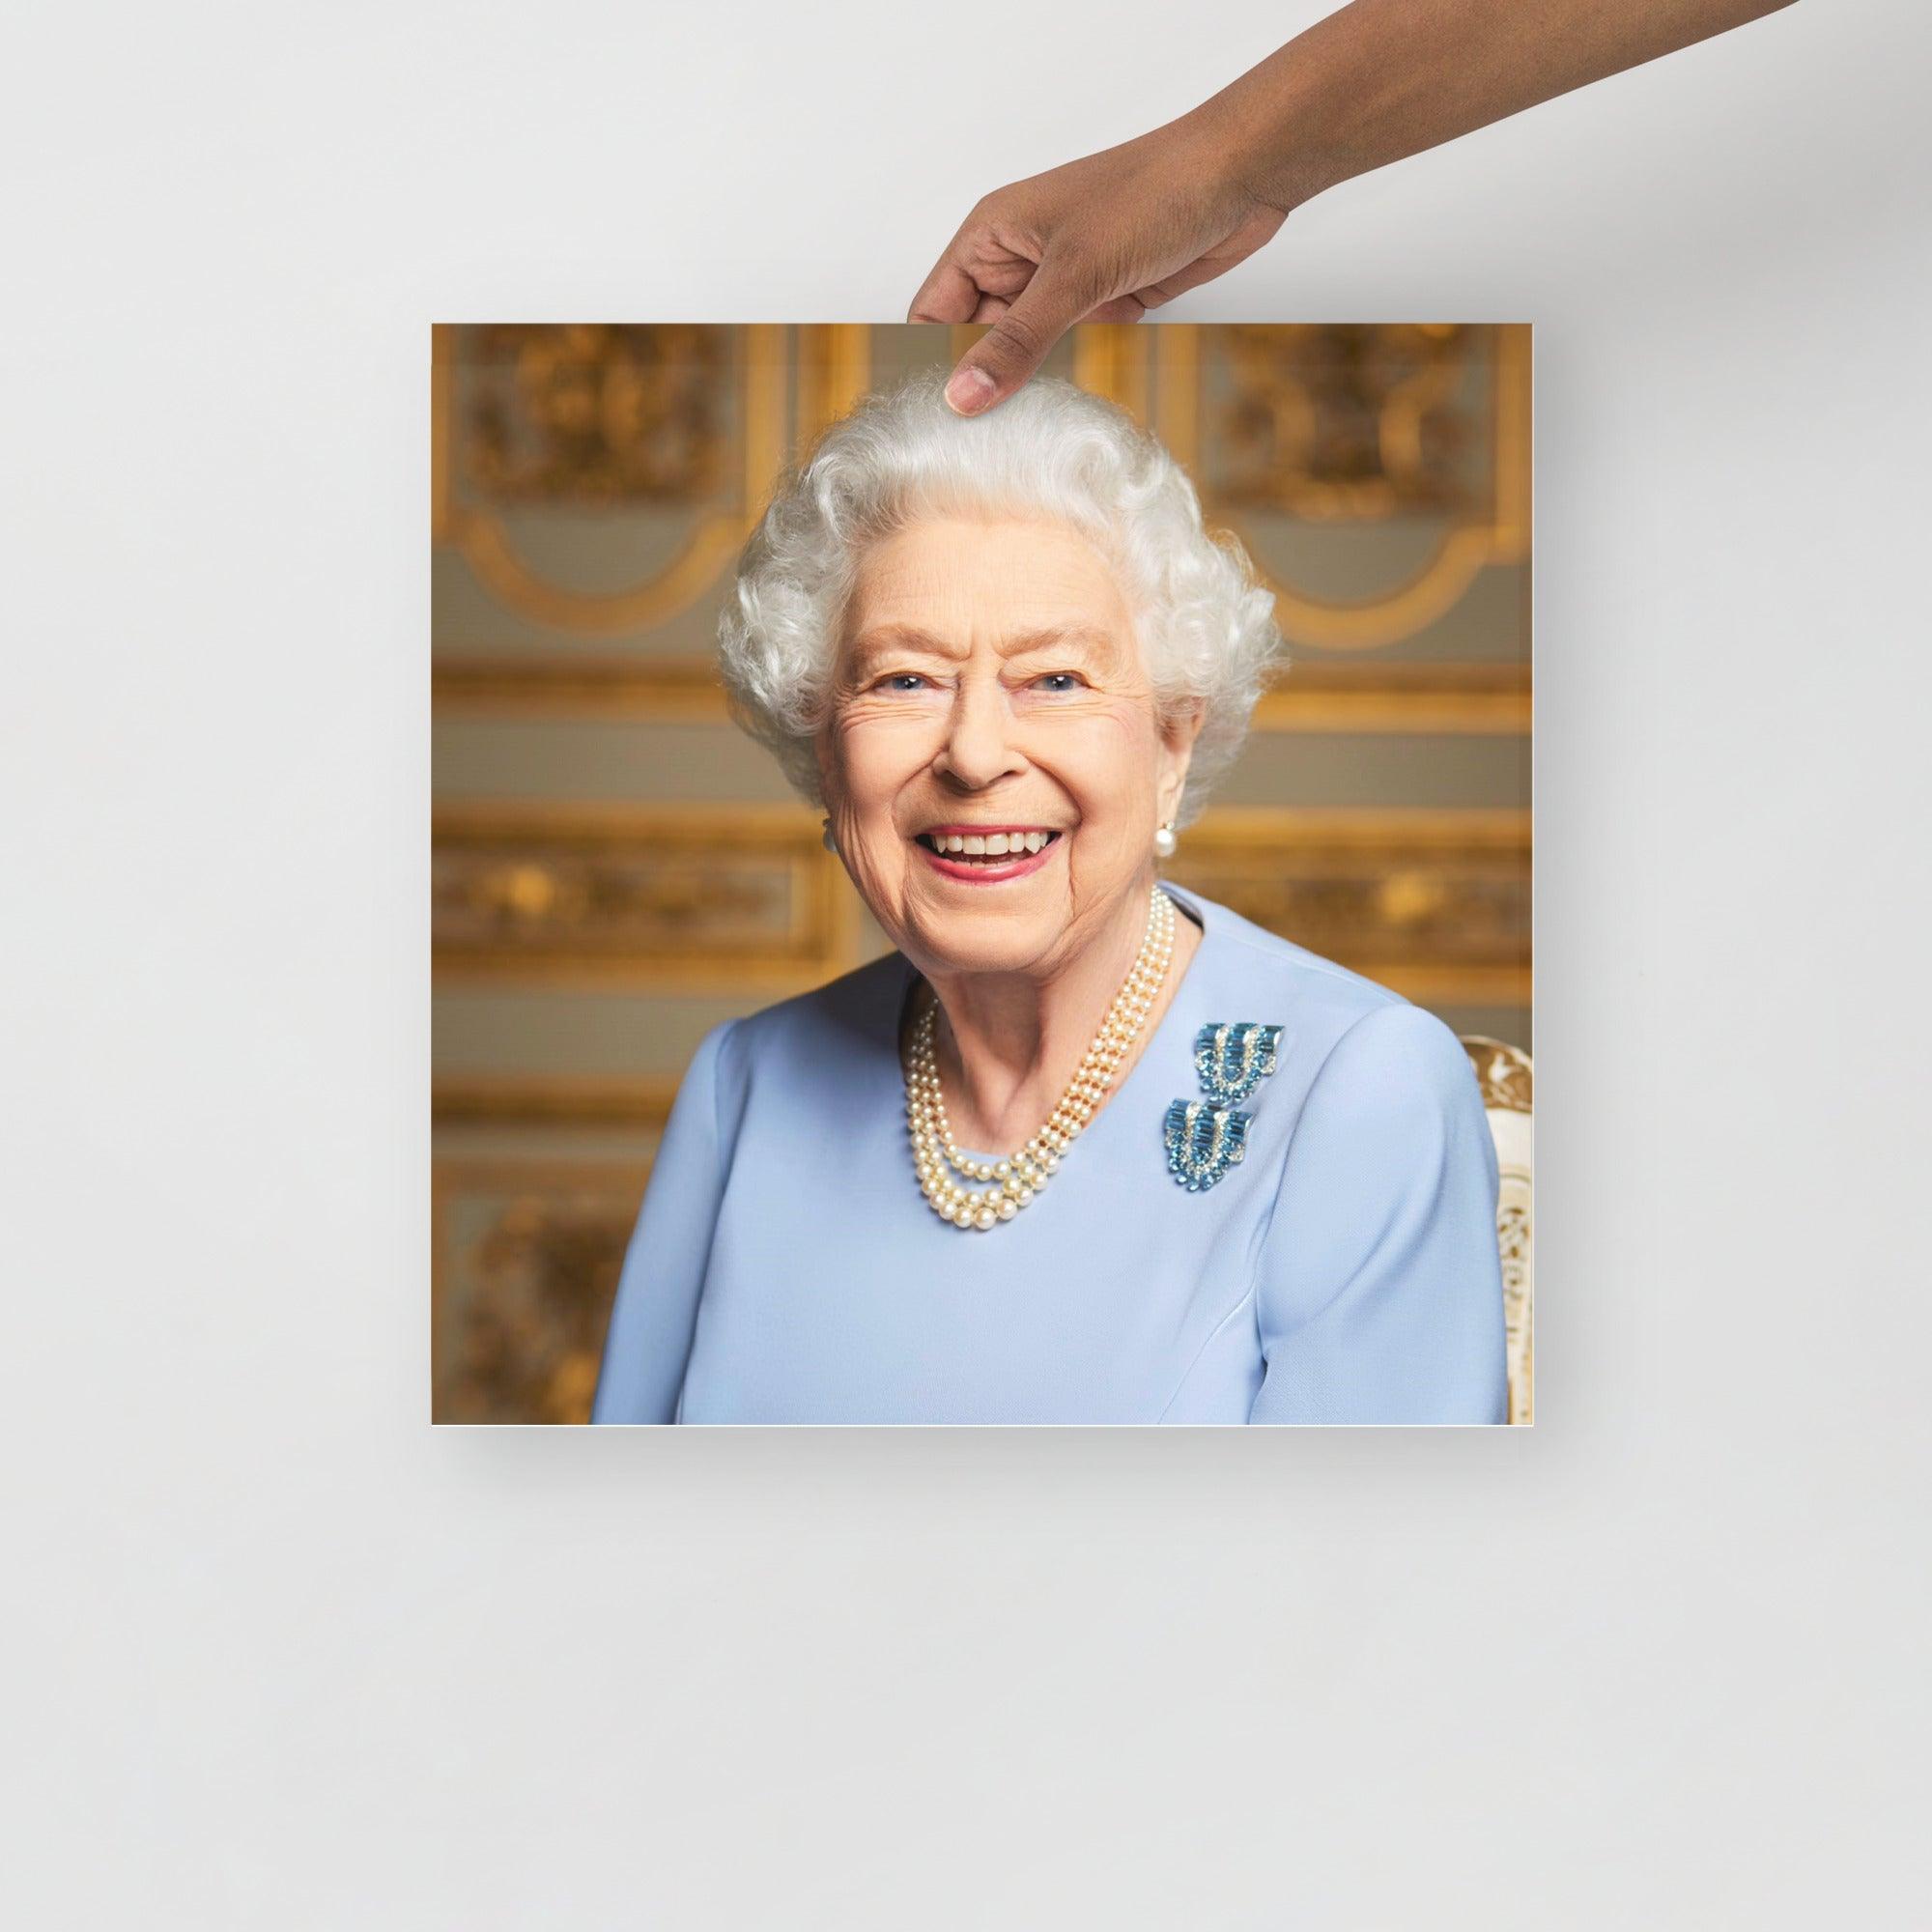 A Platinum Jubilee of Elizabeth II Official Portrait (Posthumous Release) poster on a plain backdrop in size 16x16”.